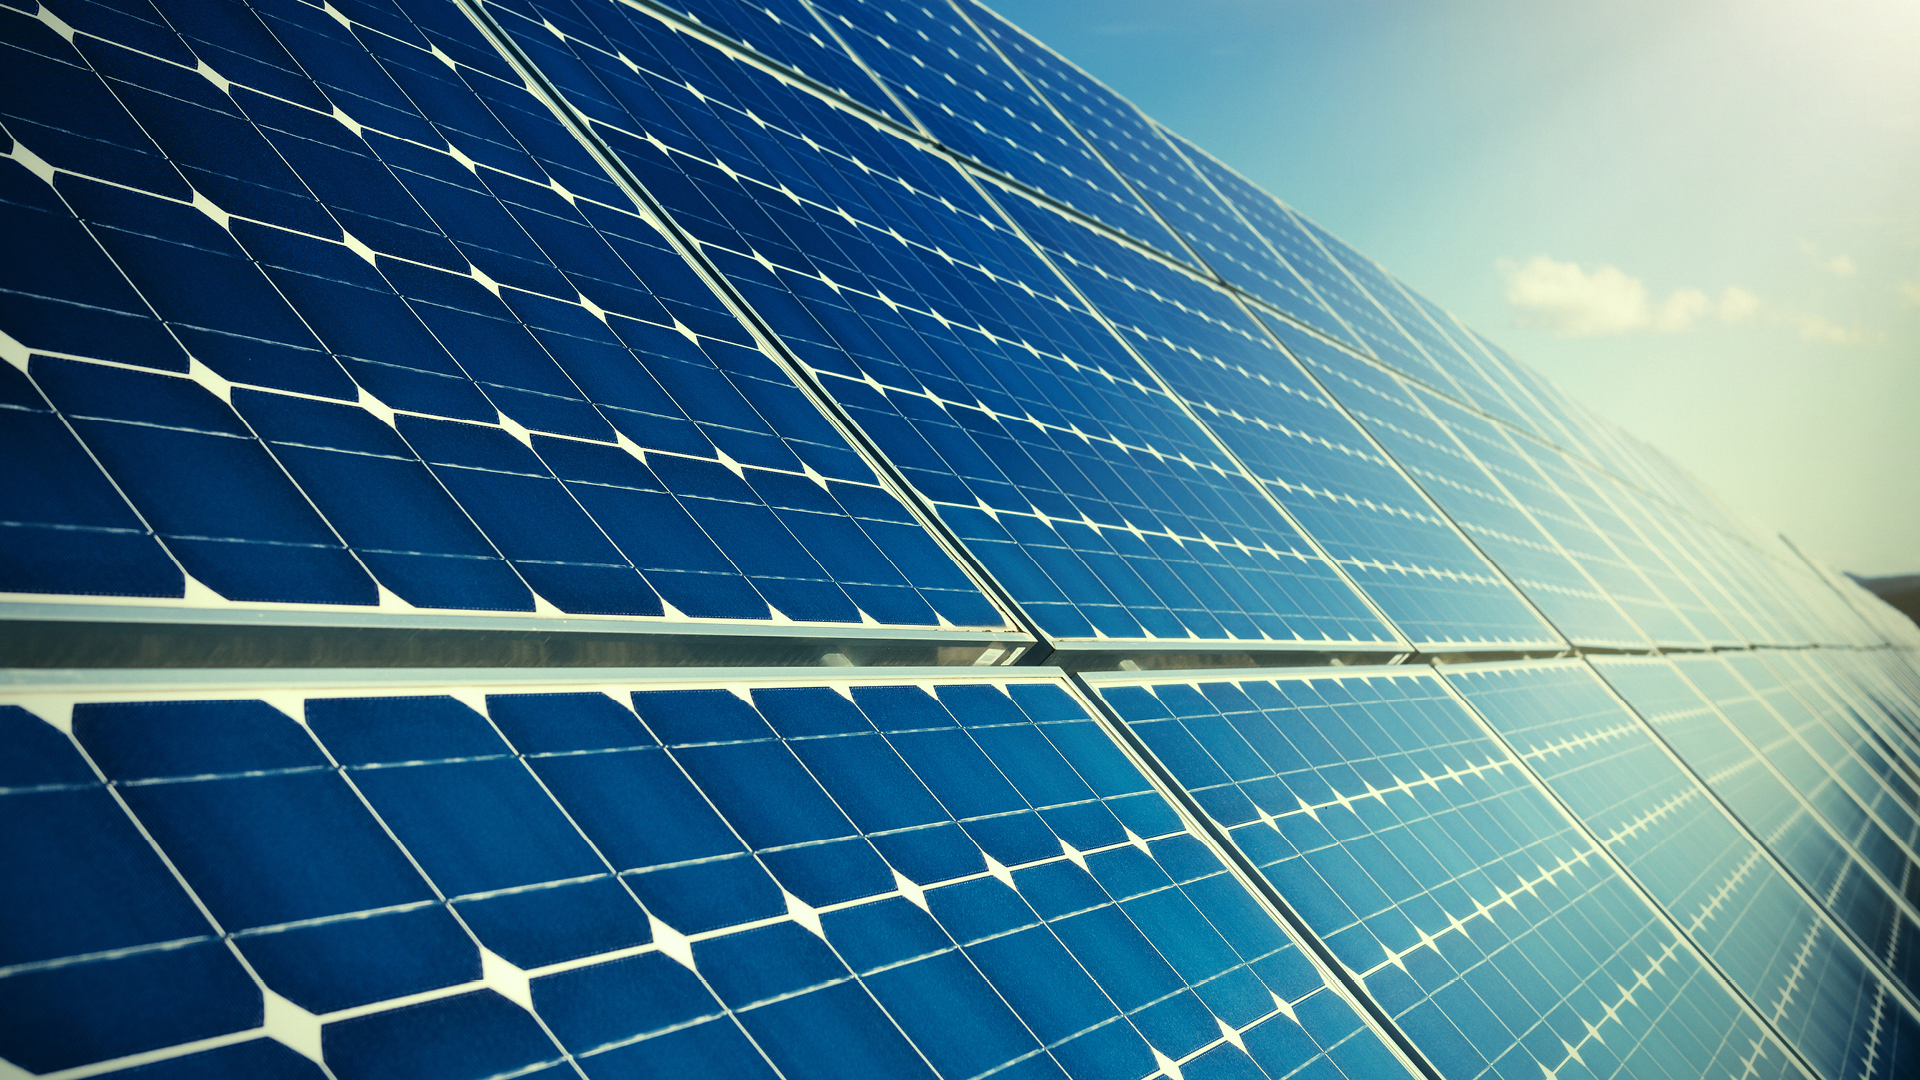 Solar panels producing renewable energy